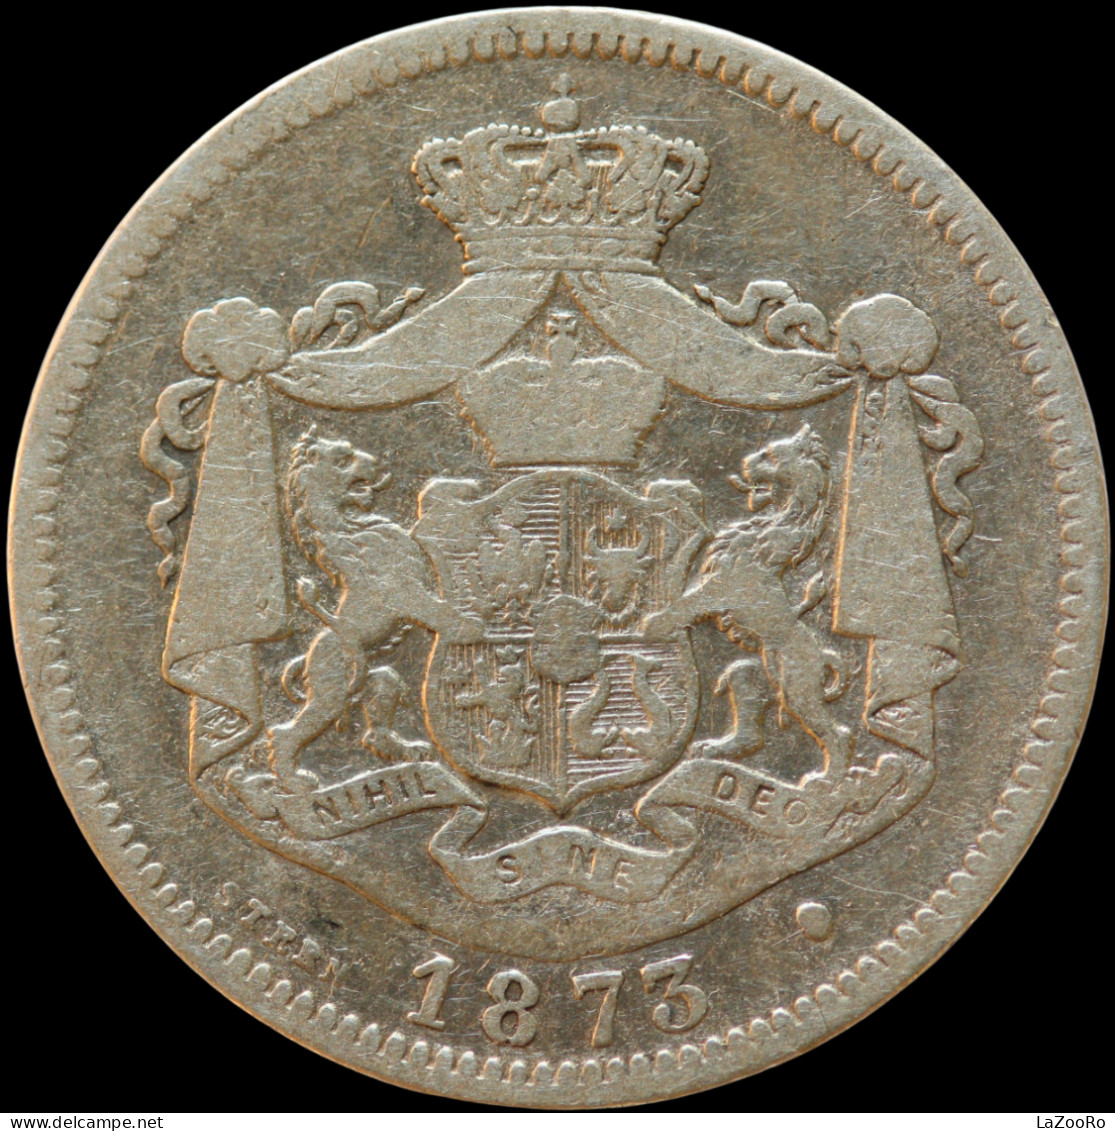 LaZooRo: Romania 1 Leu 1873 F / VF - Silver - Romania